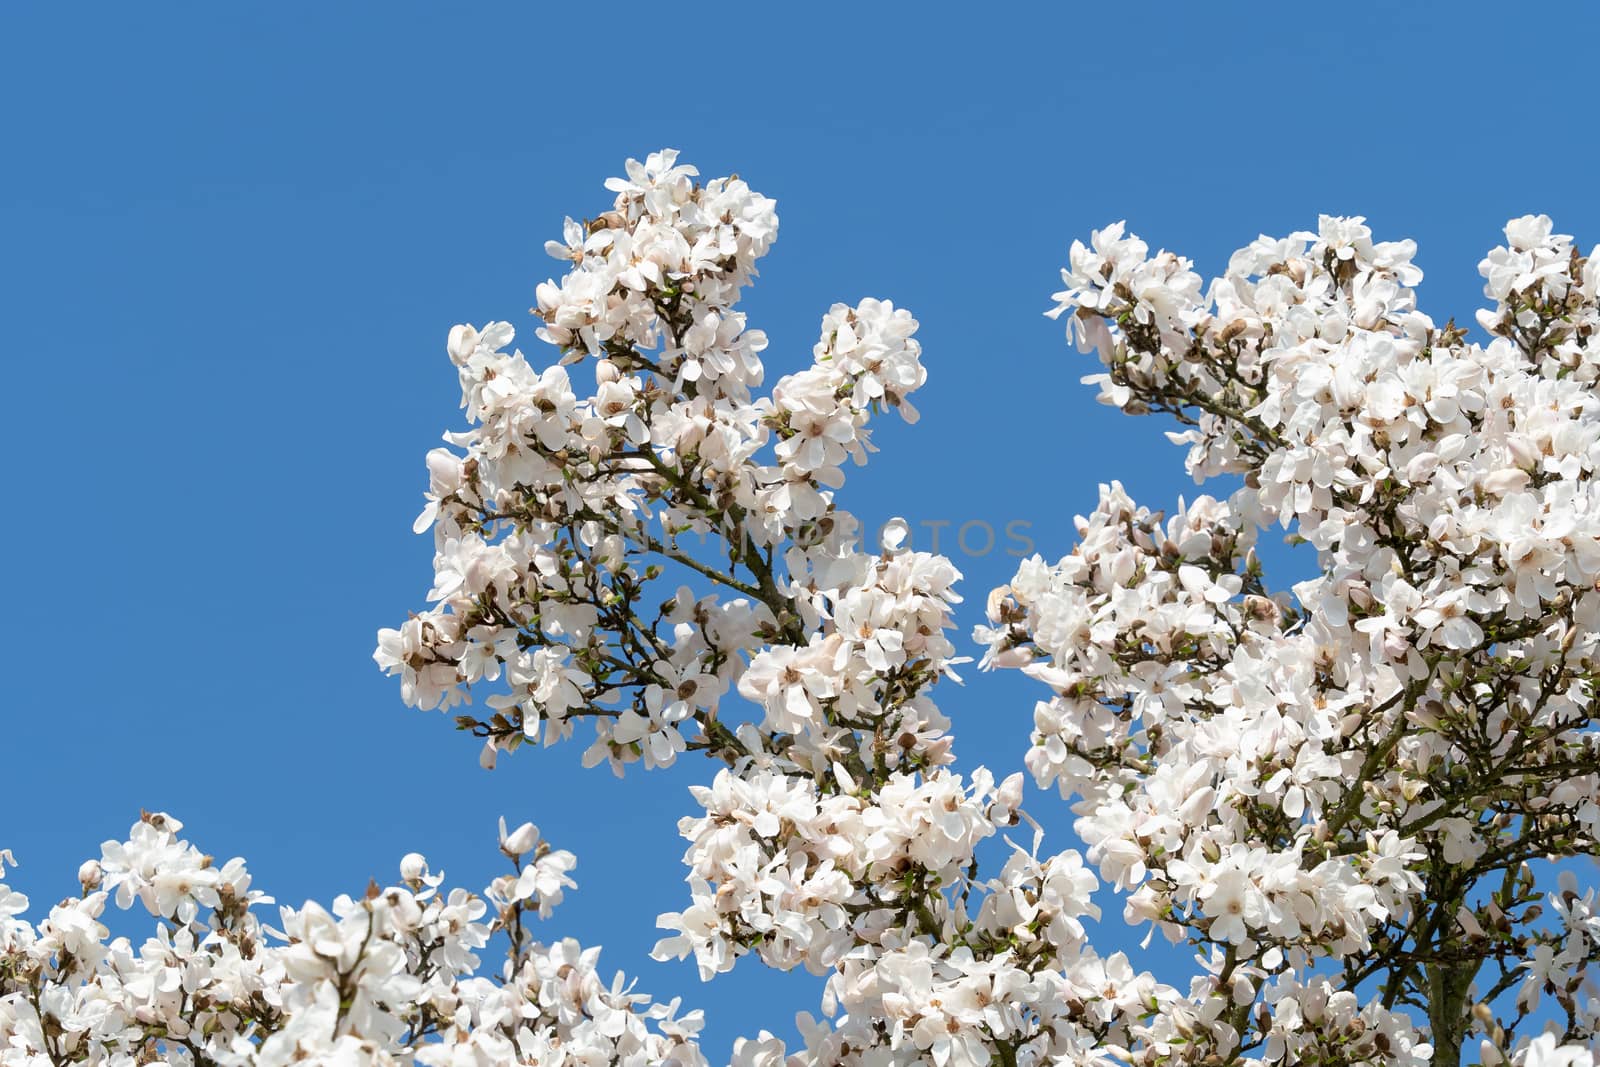 Magnolia white blossom tree flowers over blue sky. Spring floral background